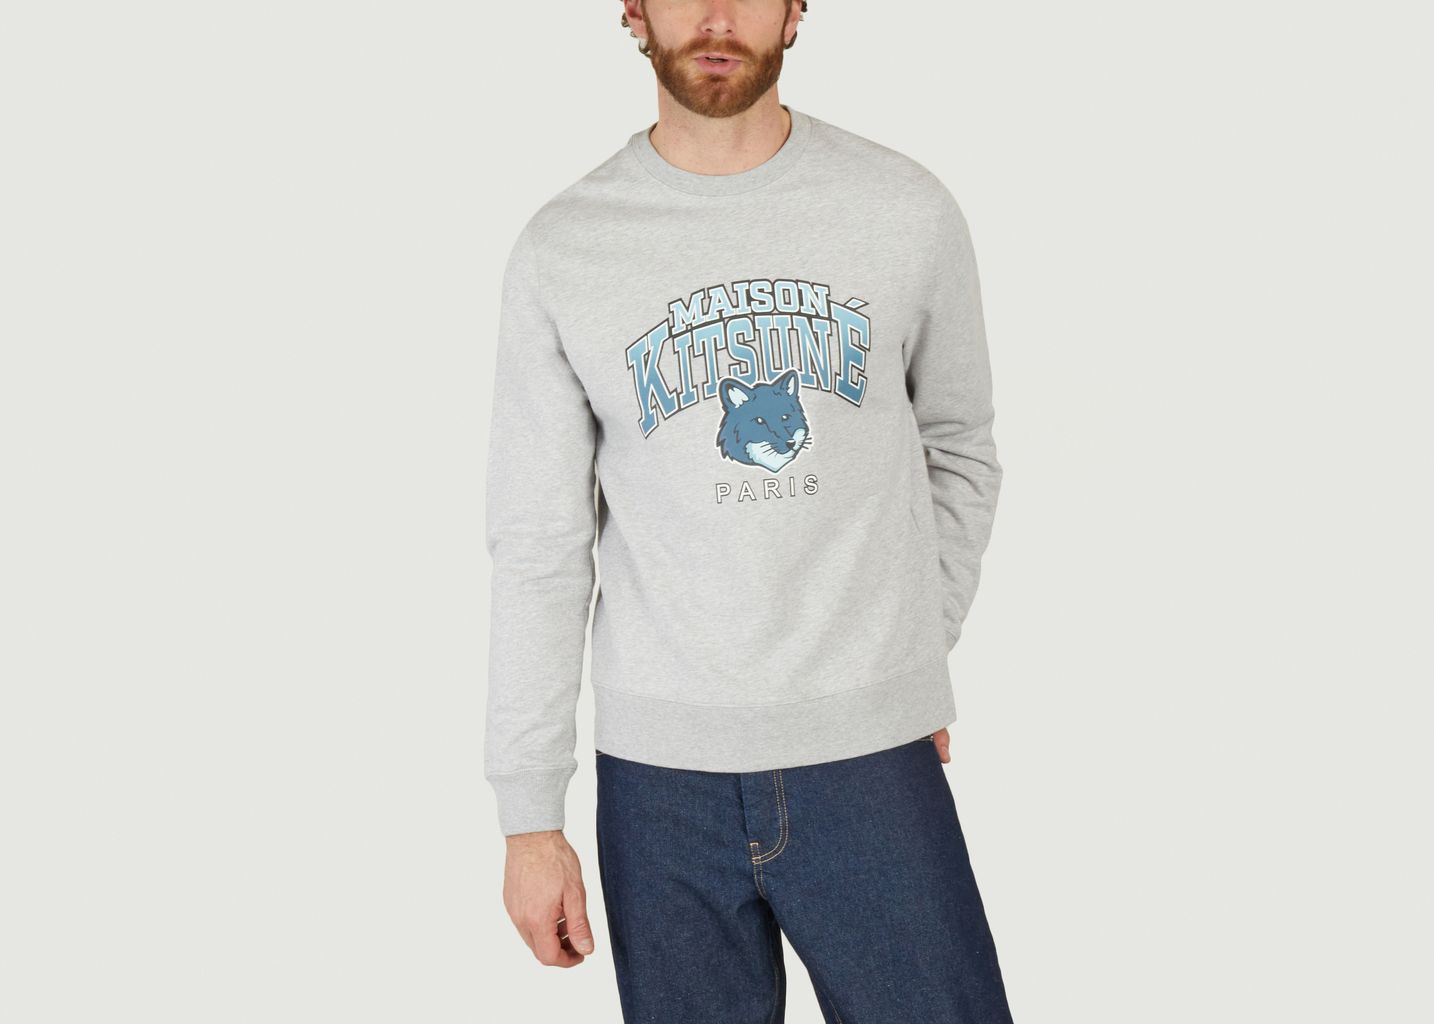 Campus Fox sweatshirt - Maison Kitsuné